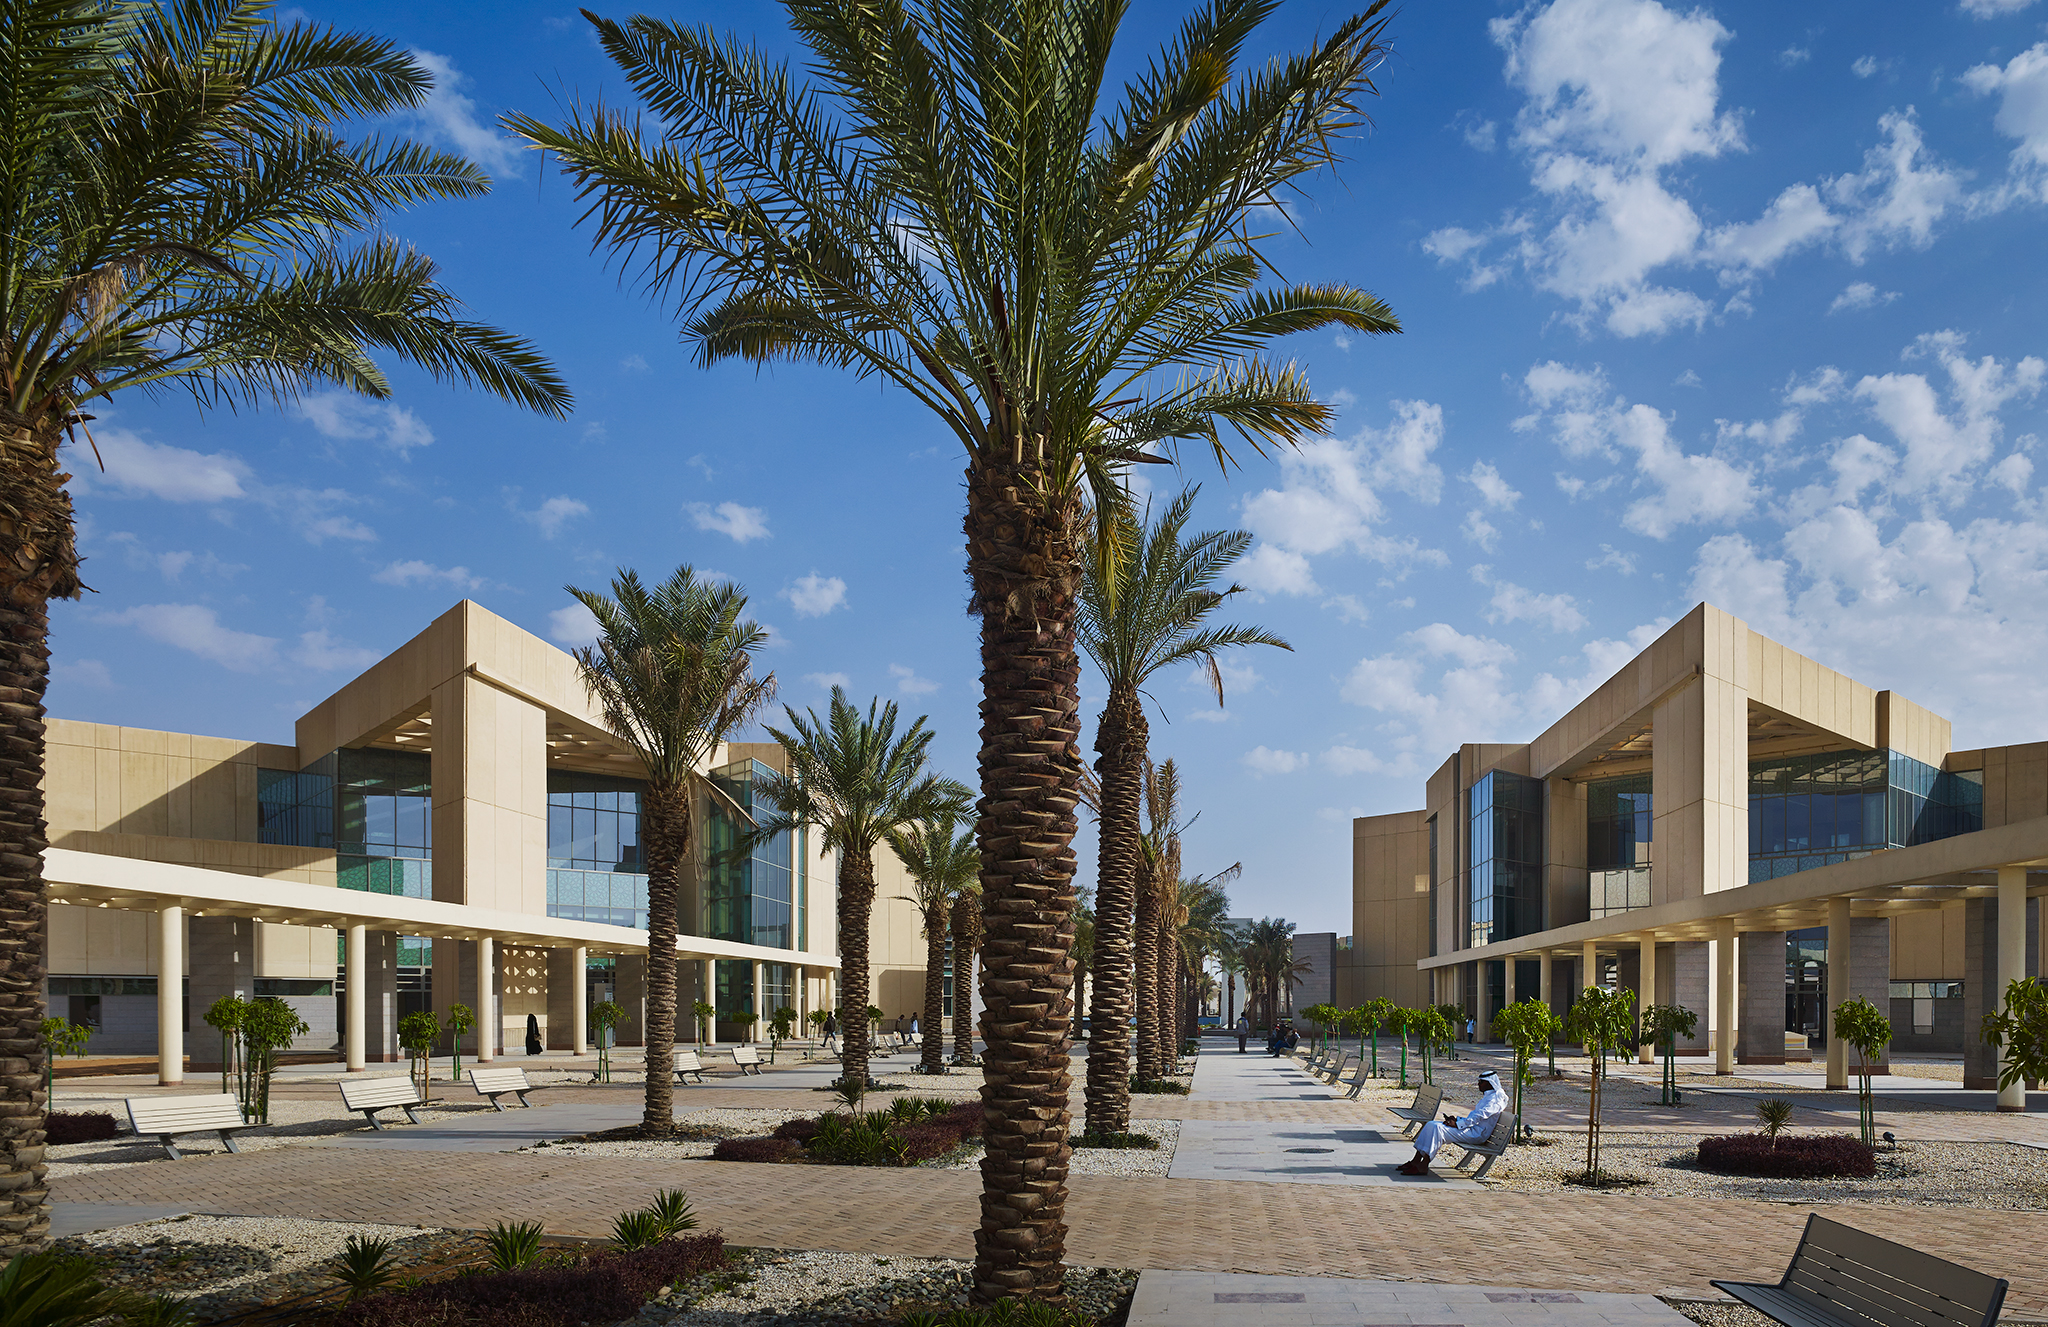  KSAU Riyadh Campus  Perkins &amp; Will | Dar Al Handasah (Shair and Partners)  Riyadh, Saudi Arabia  &nbsp;   Return to Projects  